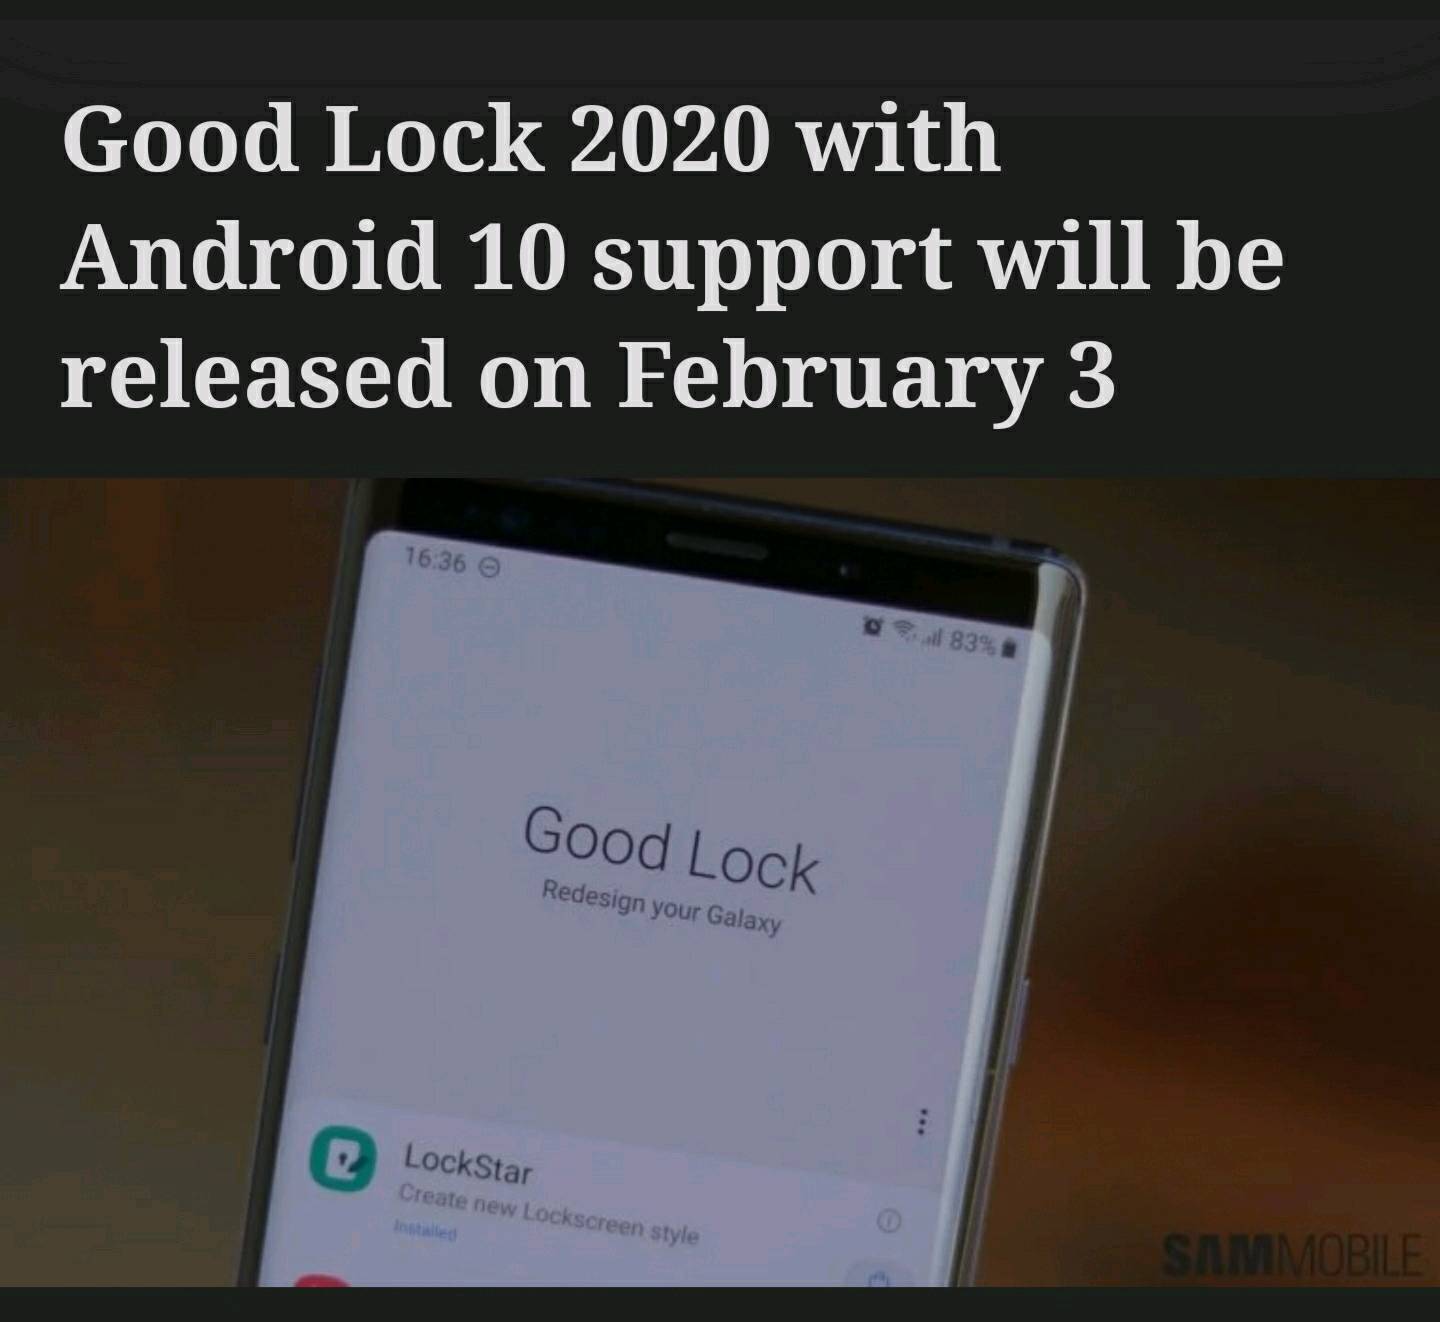 GOODLOCK 2020/UPDATE/FEBRUARY - Samsung Members